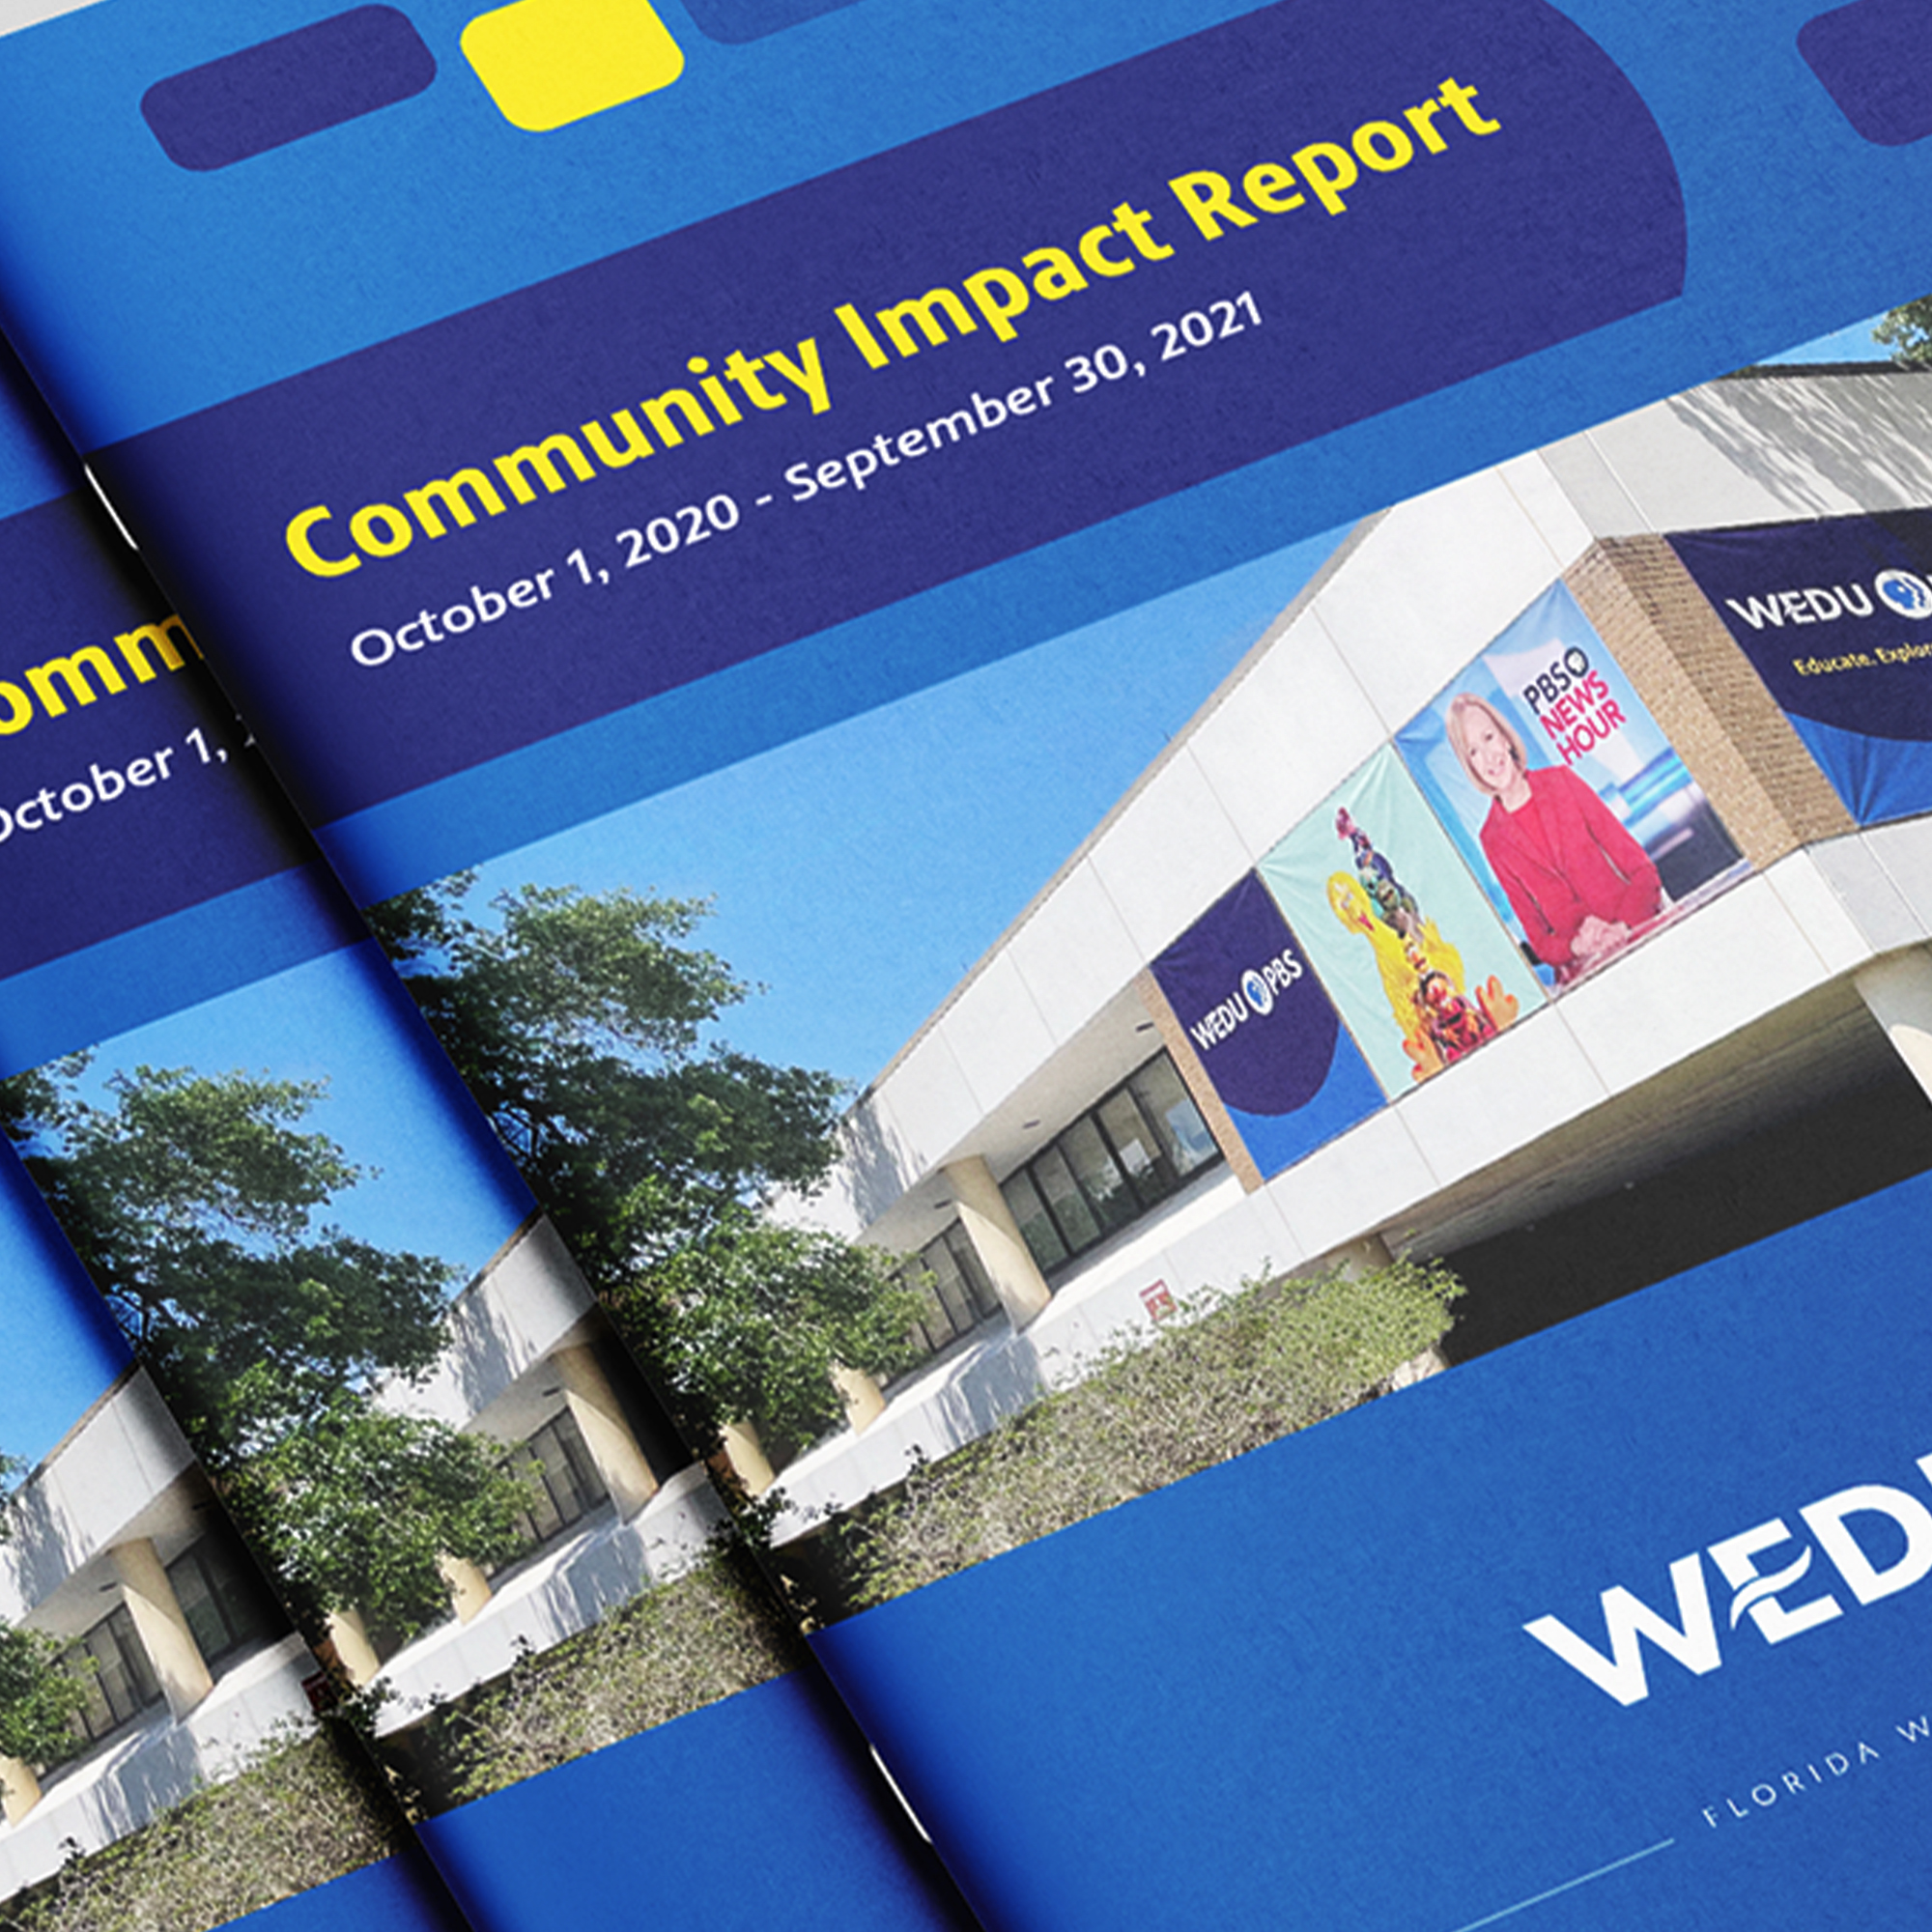 WEDU PBS Community Impact Report